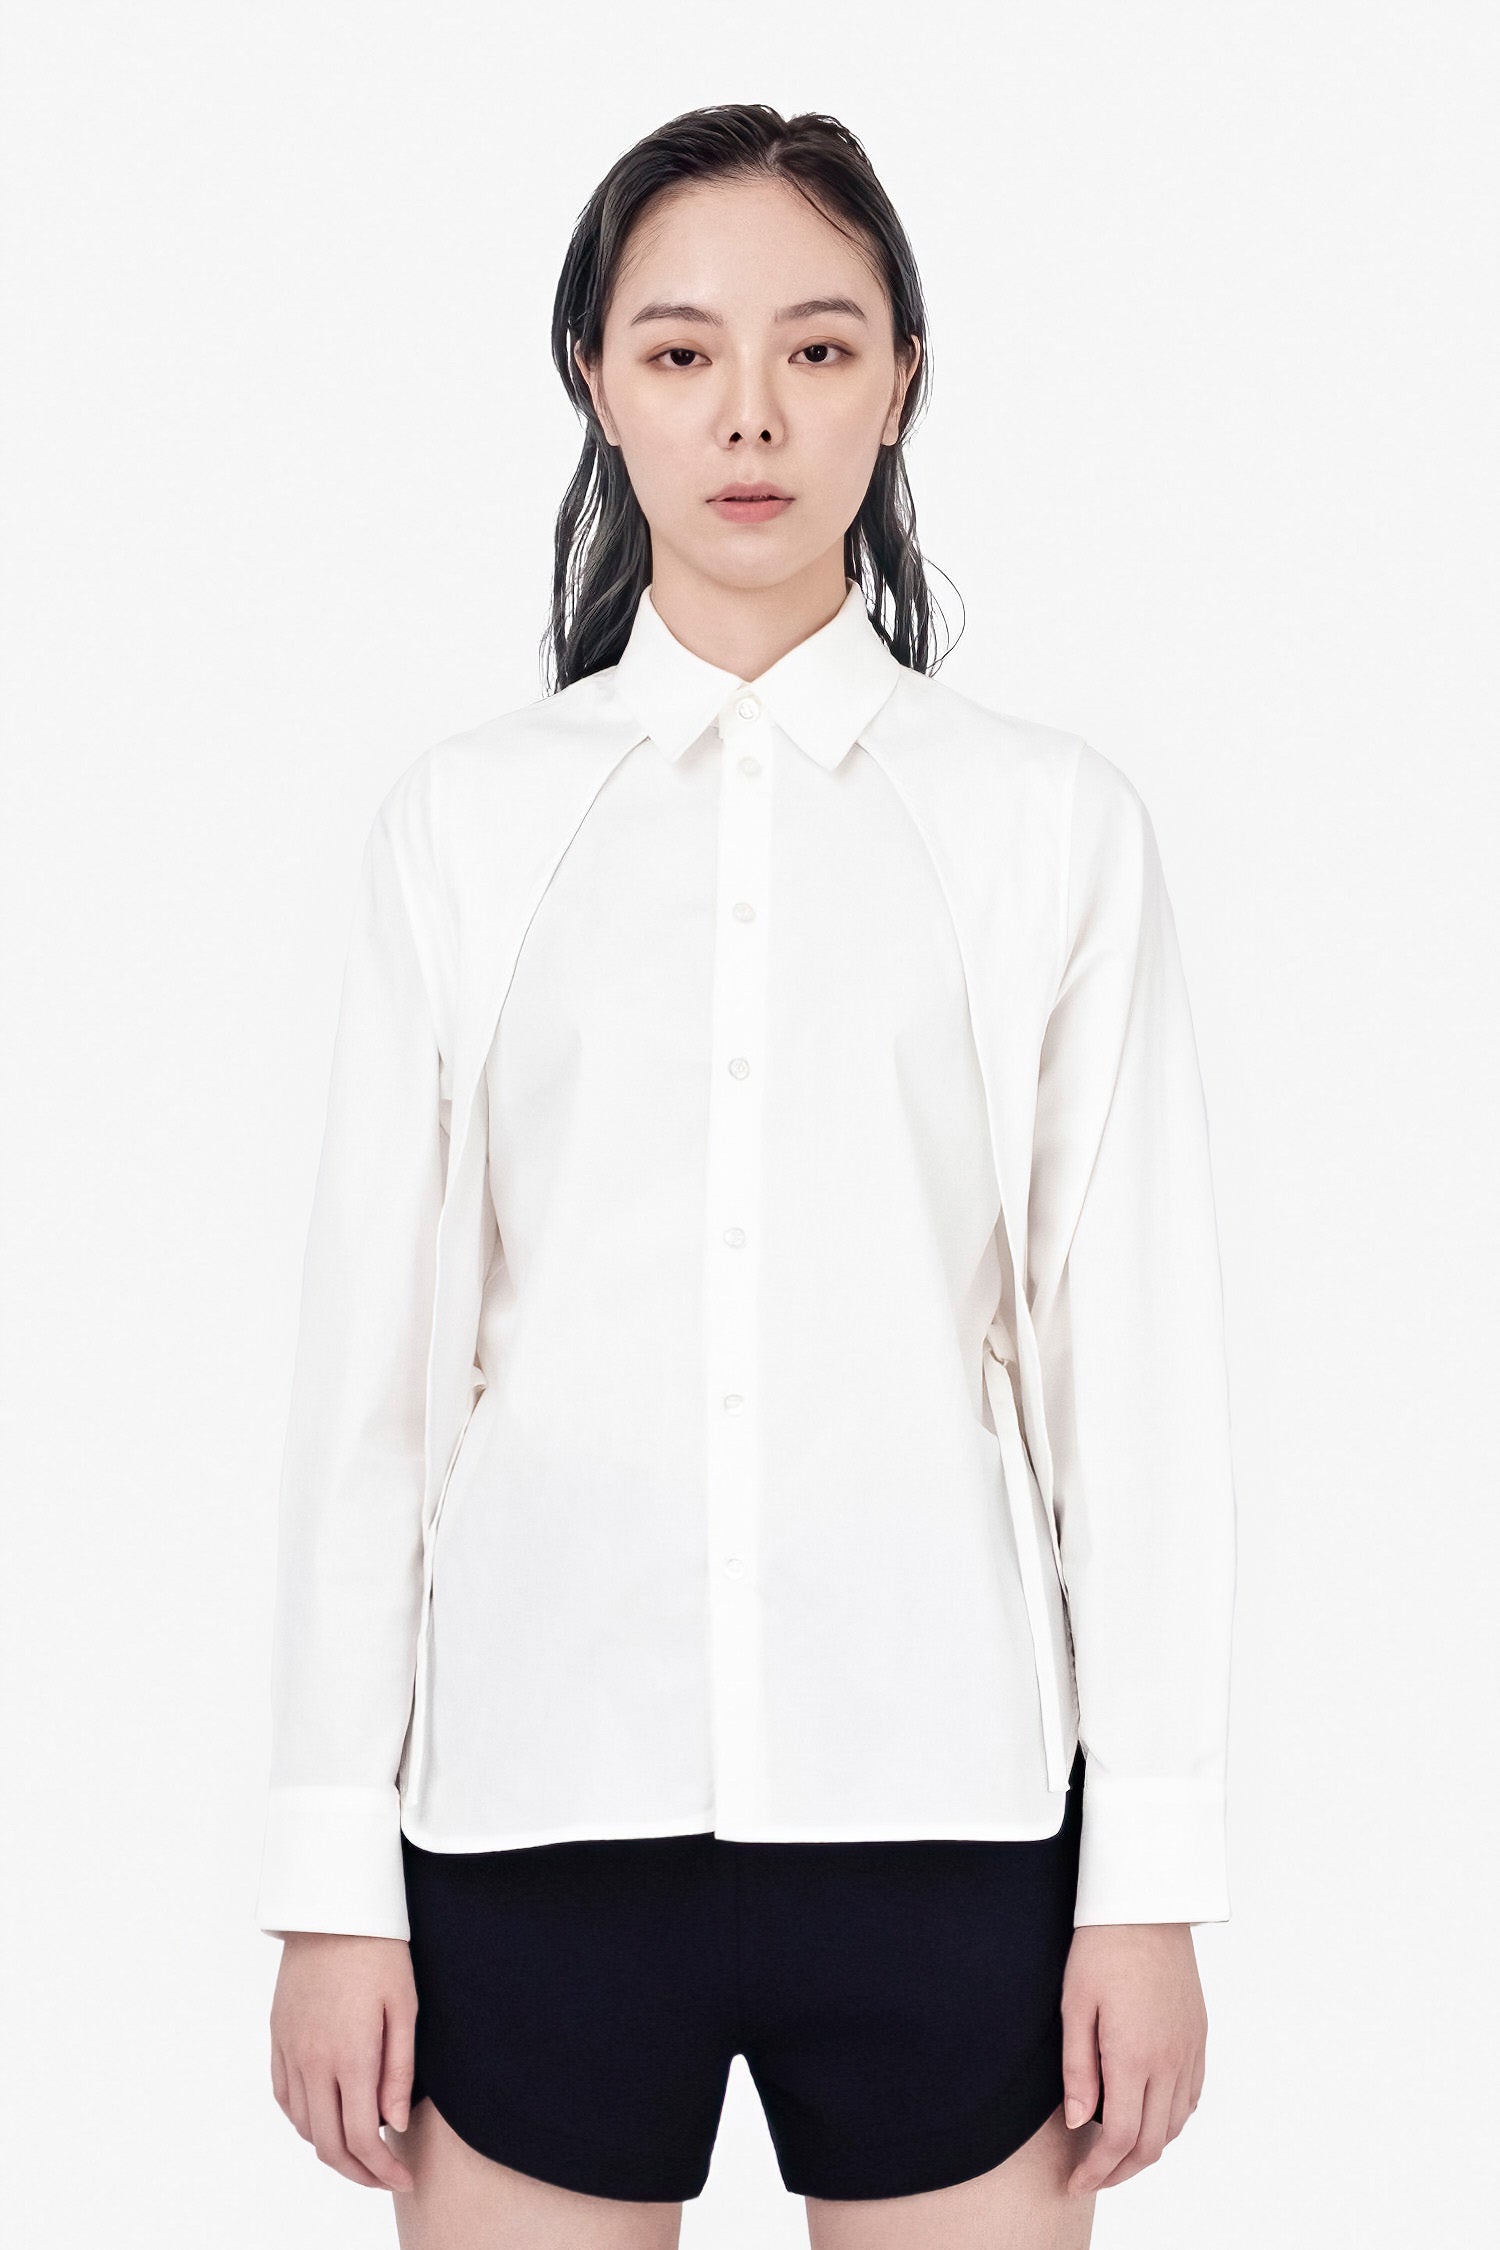 SEANNUNG - WOMEN -  Double Layered Shoulder Detail Shirt 層次披肩襯衫